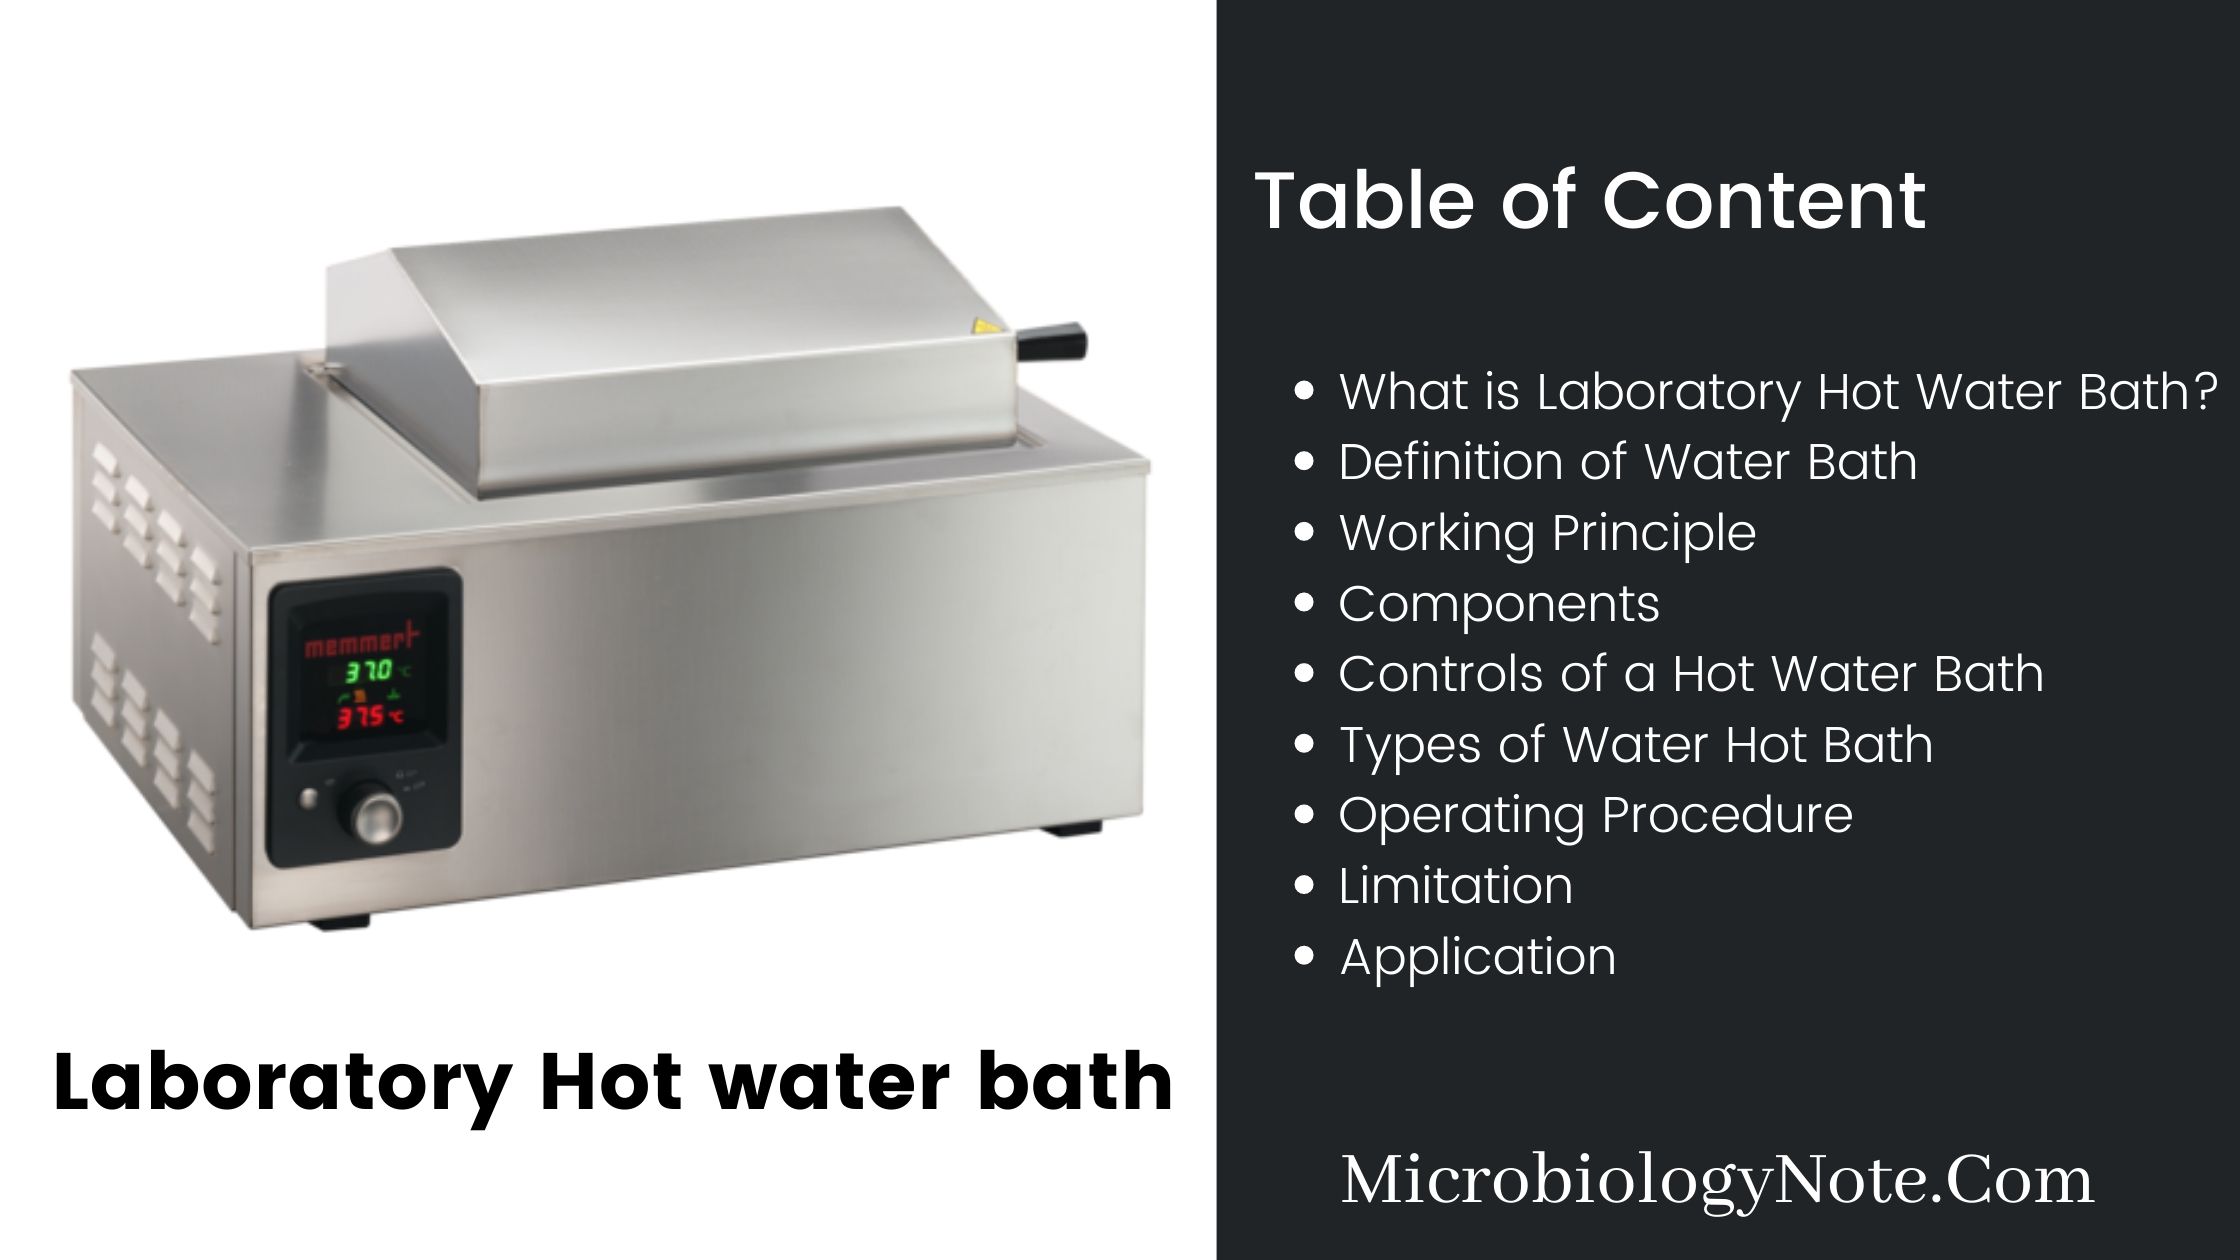 Laboratory Hot water bath